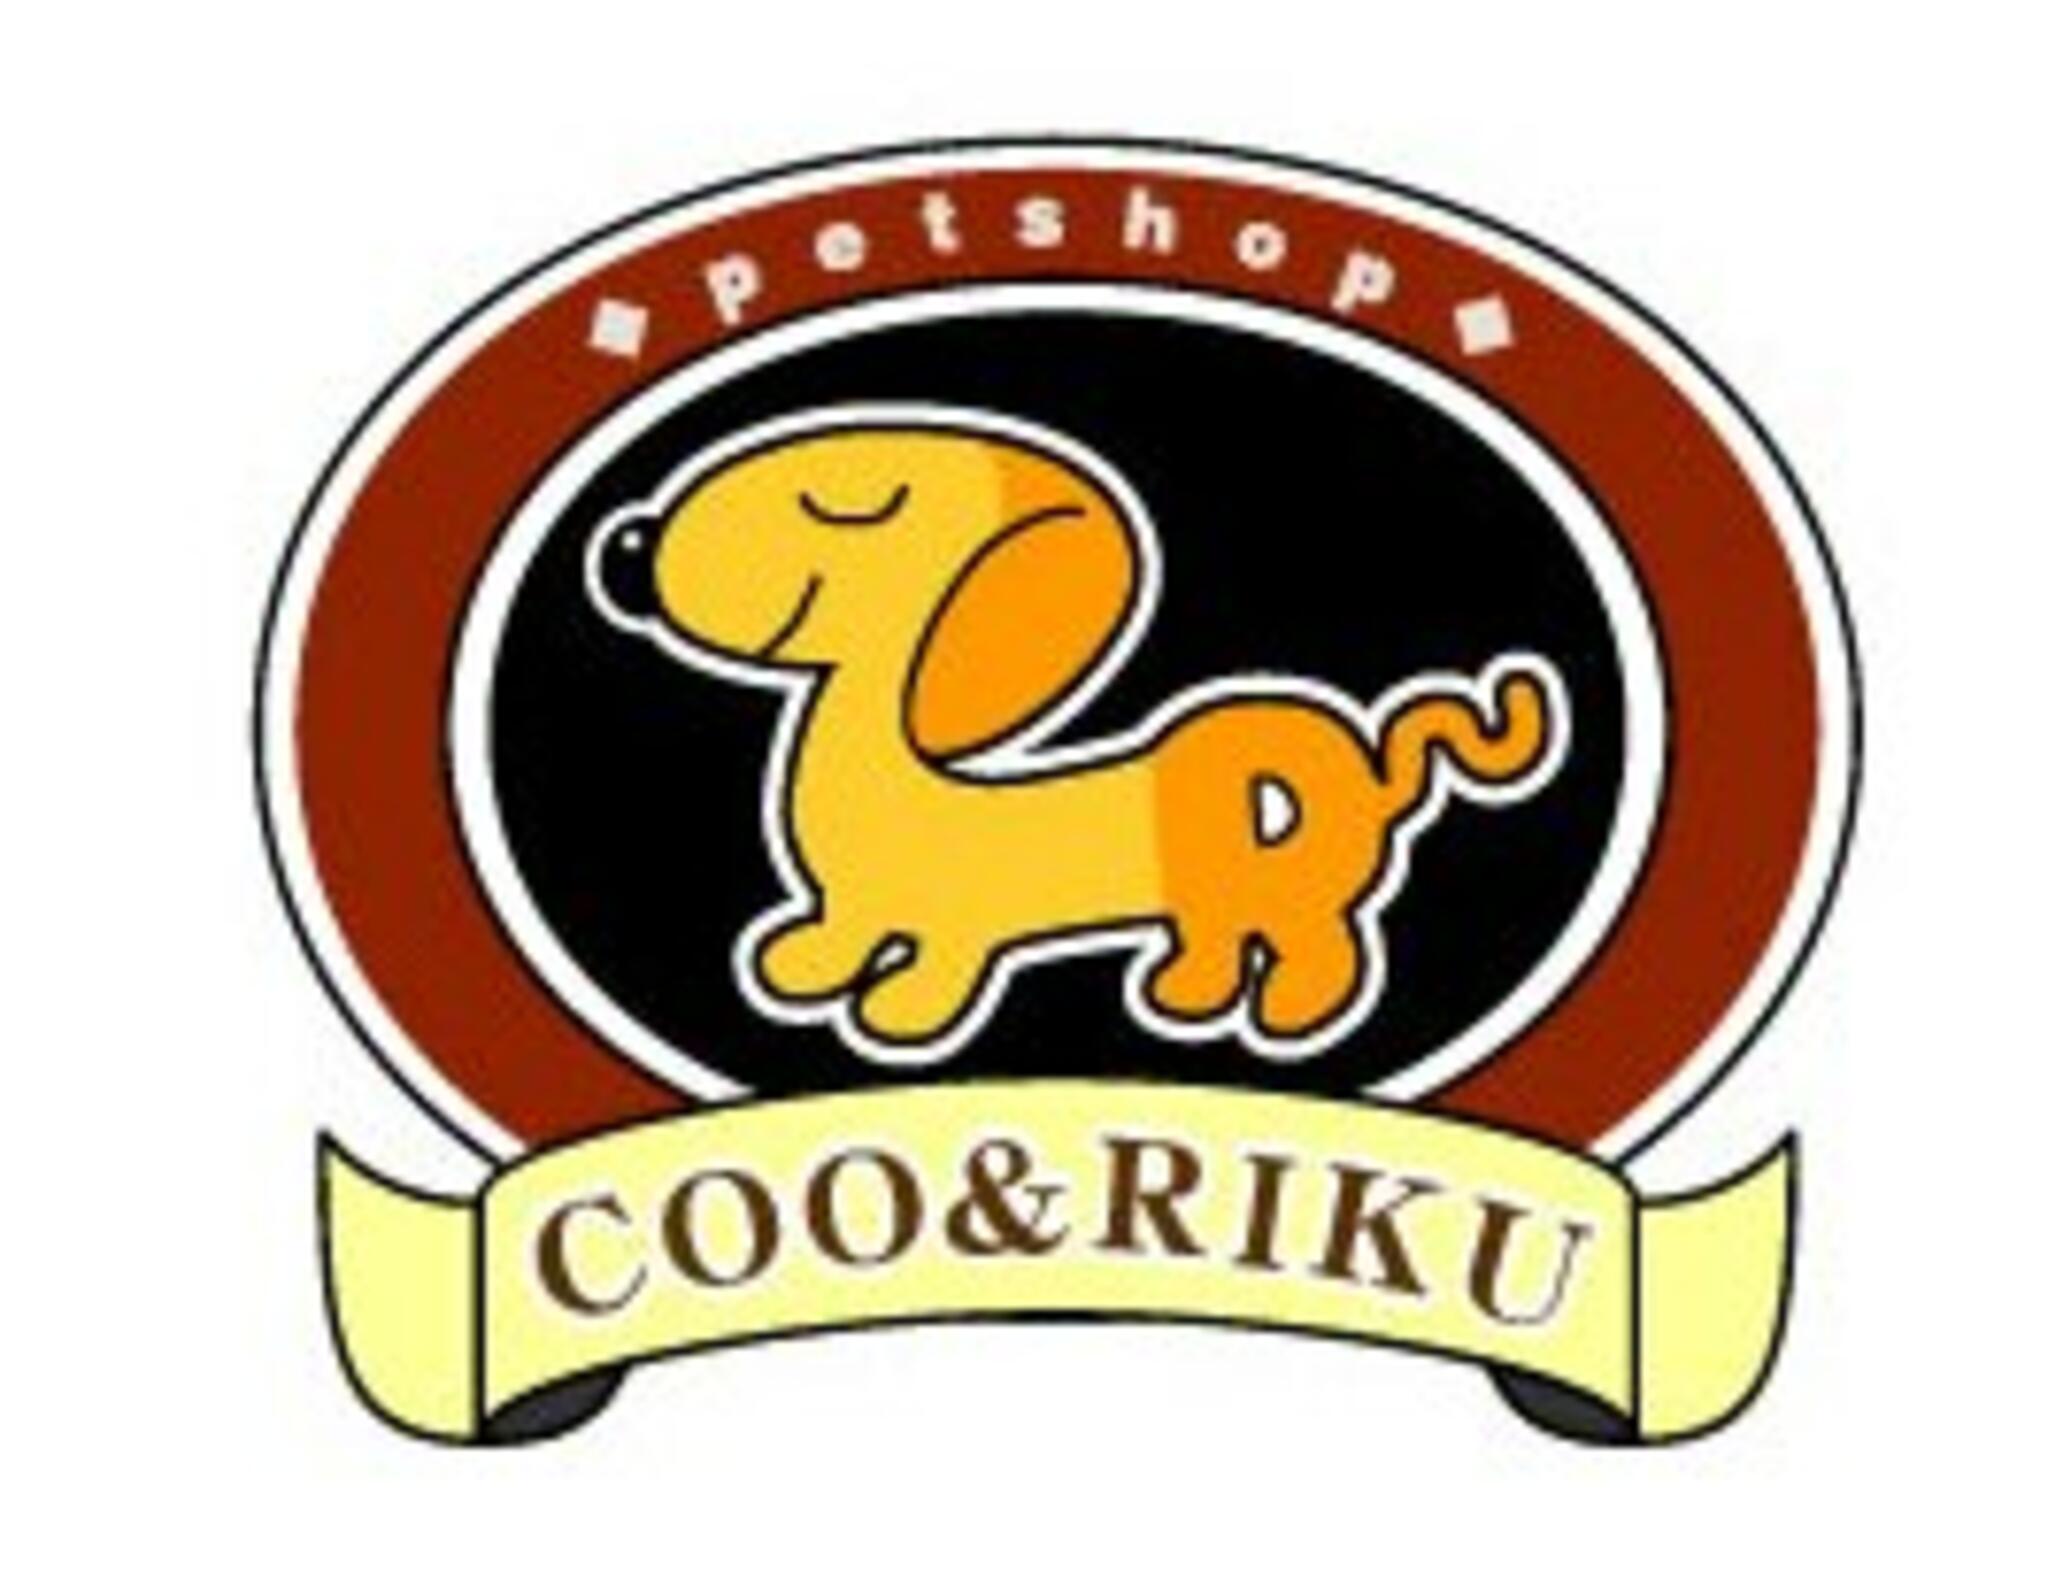 COO&RIKU 福島店の代表写真5